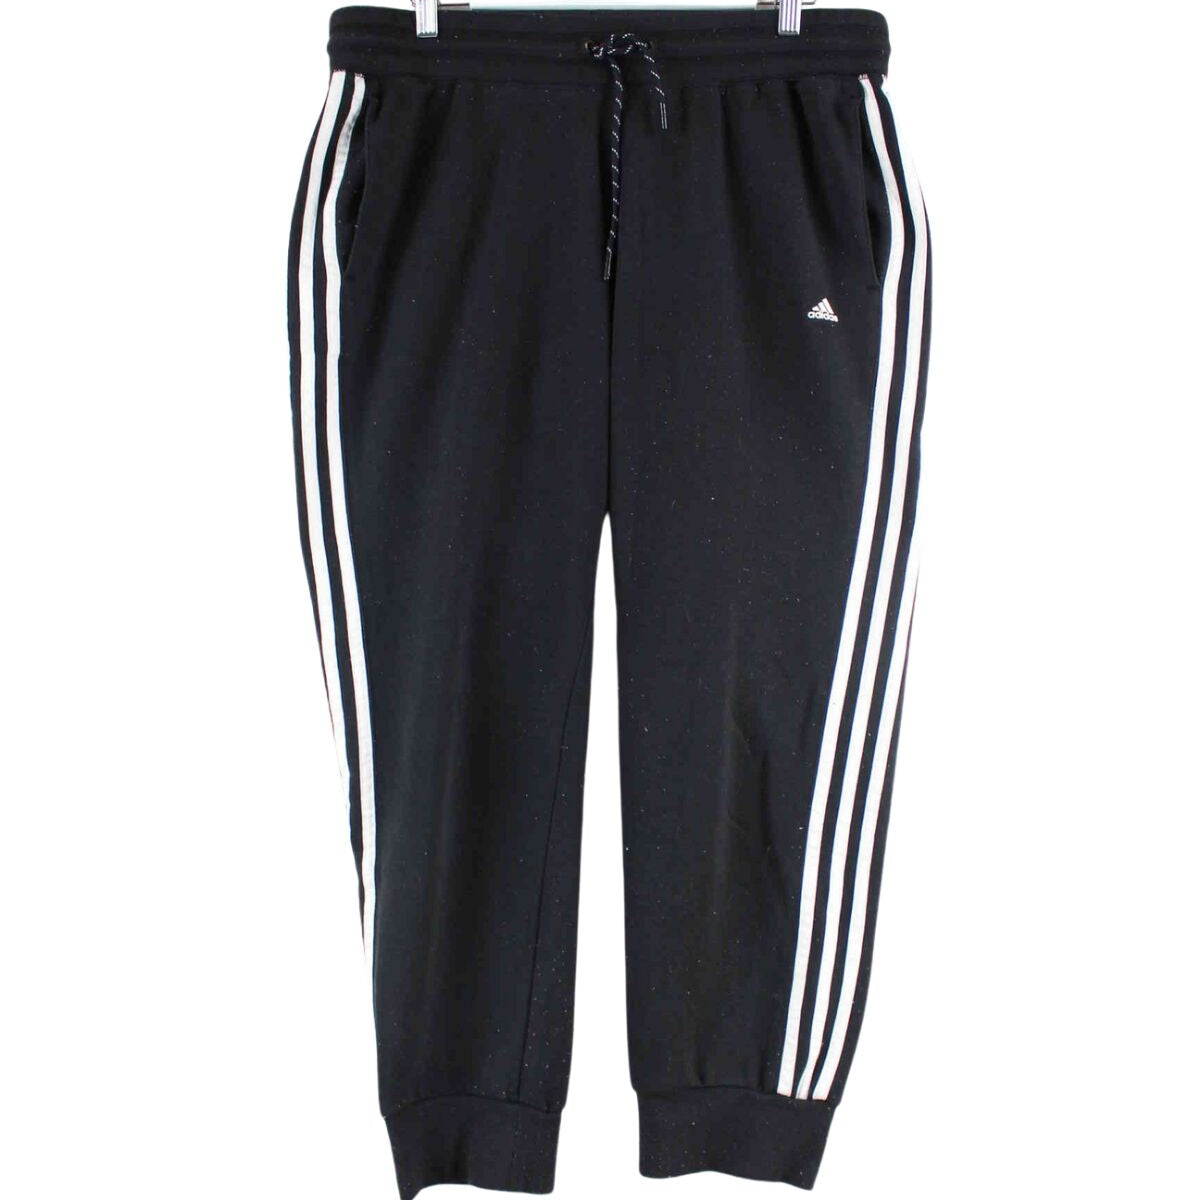 Adidas Damen Essentials 3-Stripes Jogginghose Schwarz L (front image)